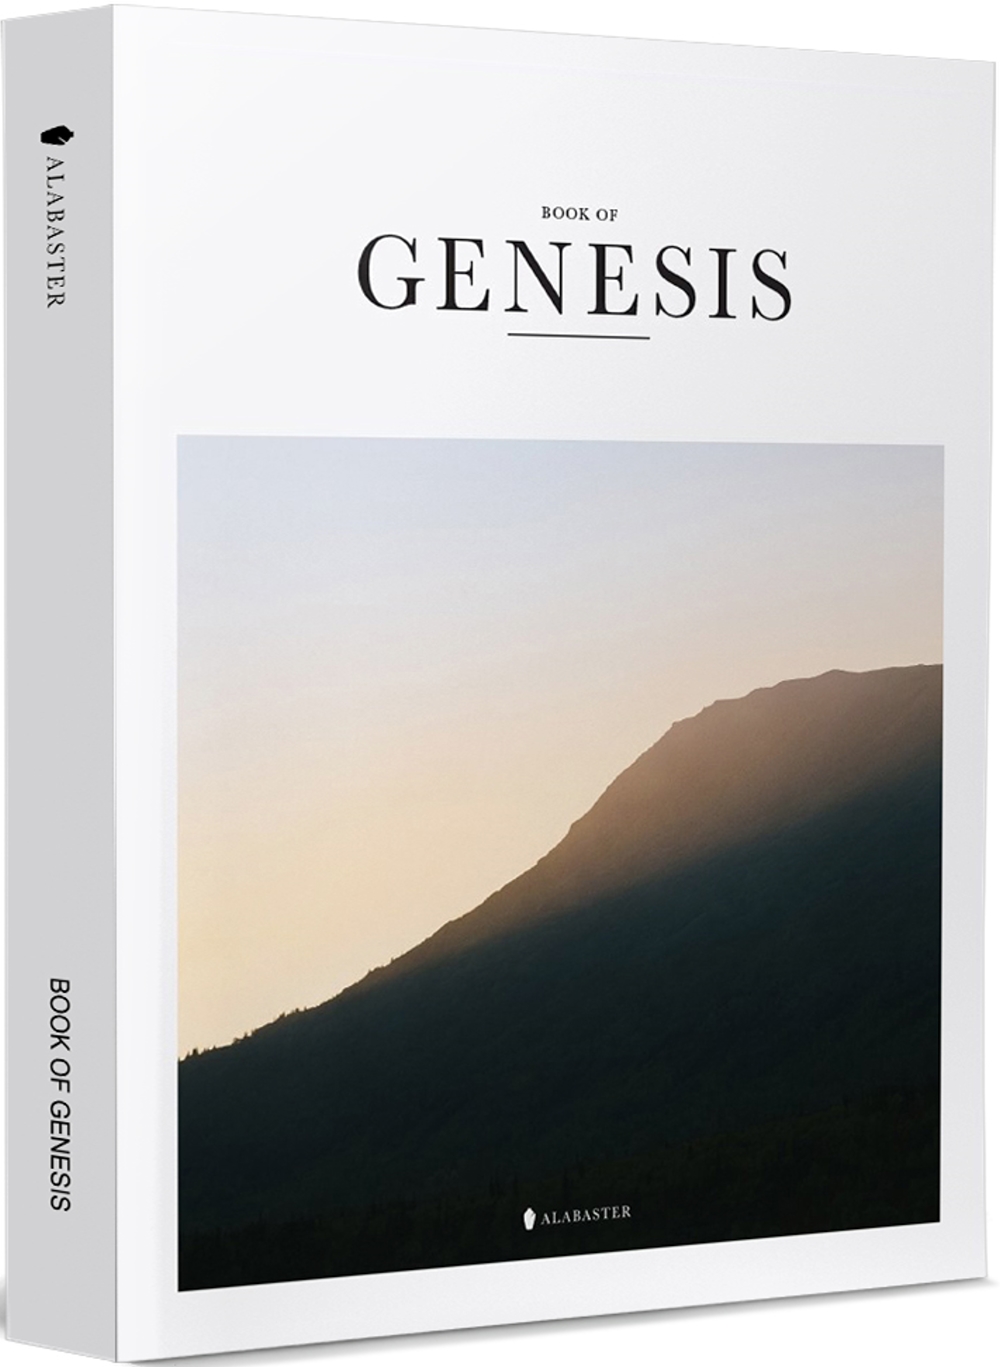 BOOK OF GENESIS(New Living Translation)